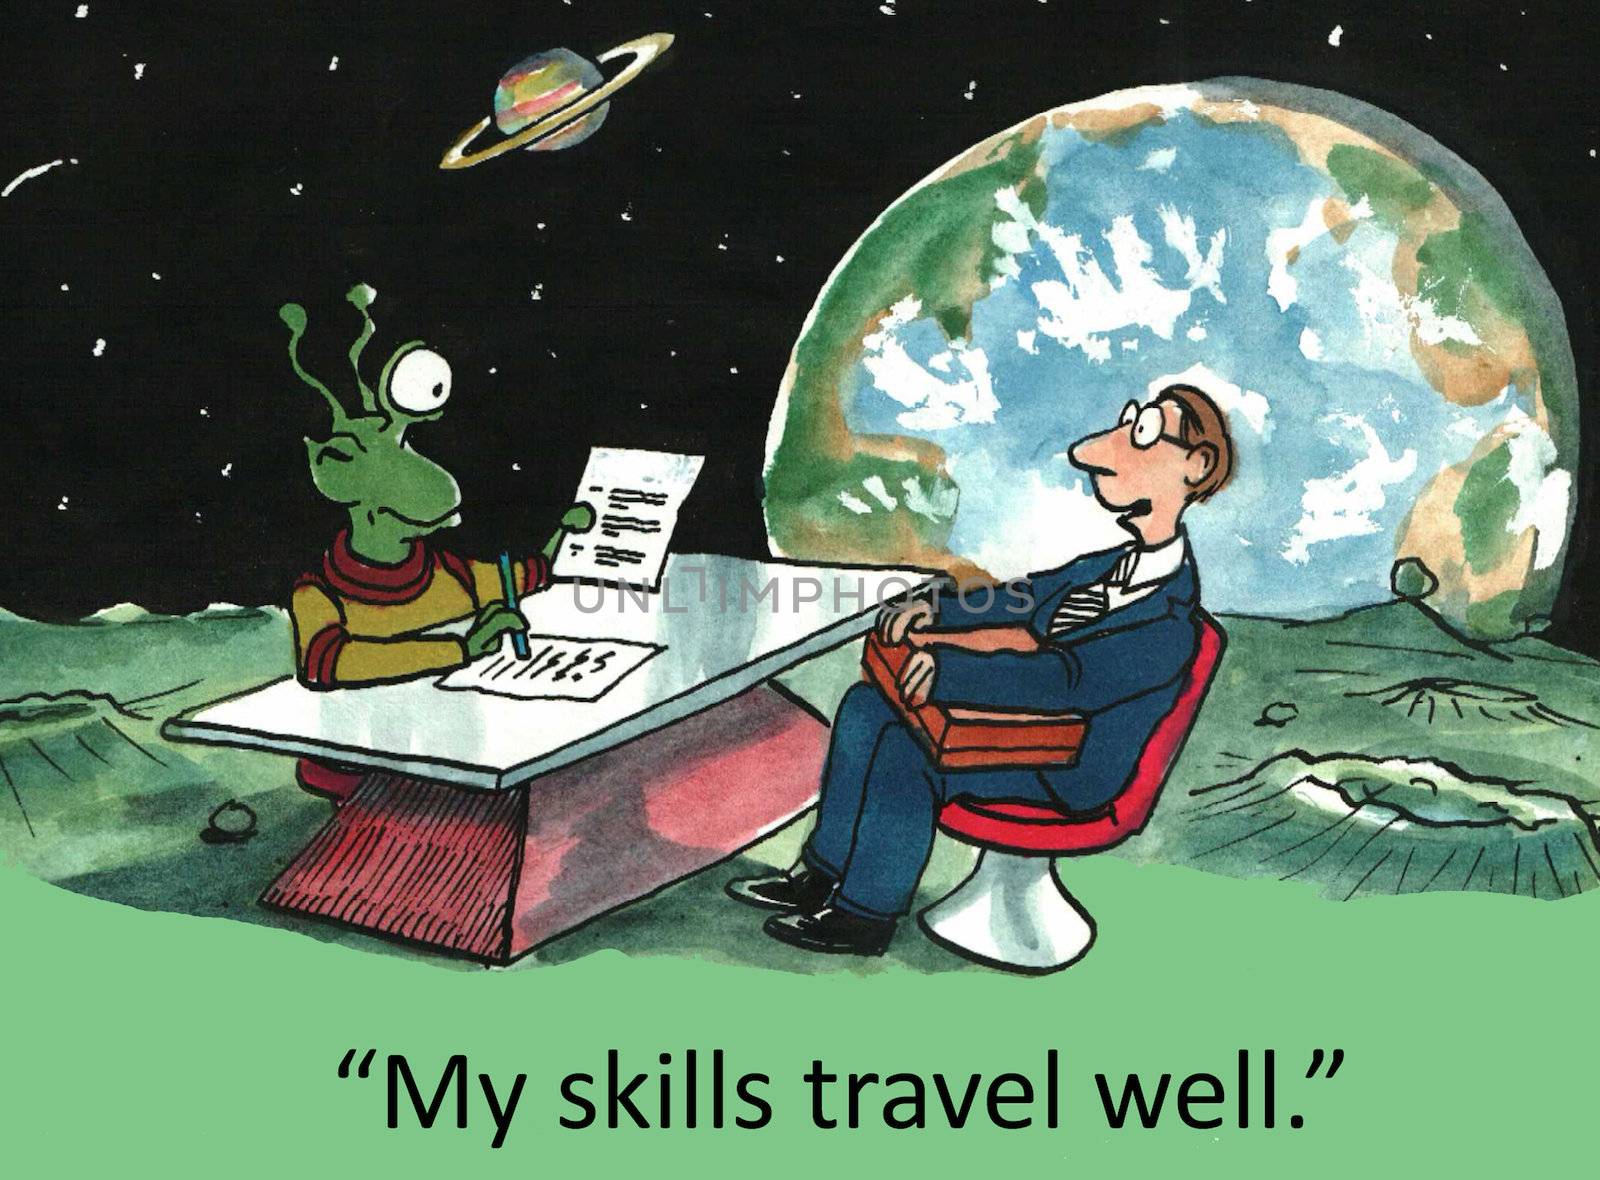 "My skills travel well."